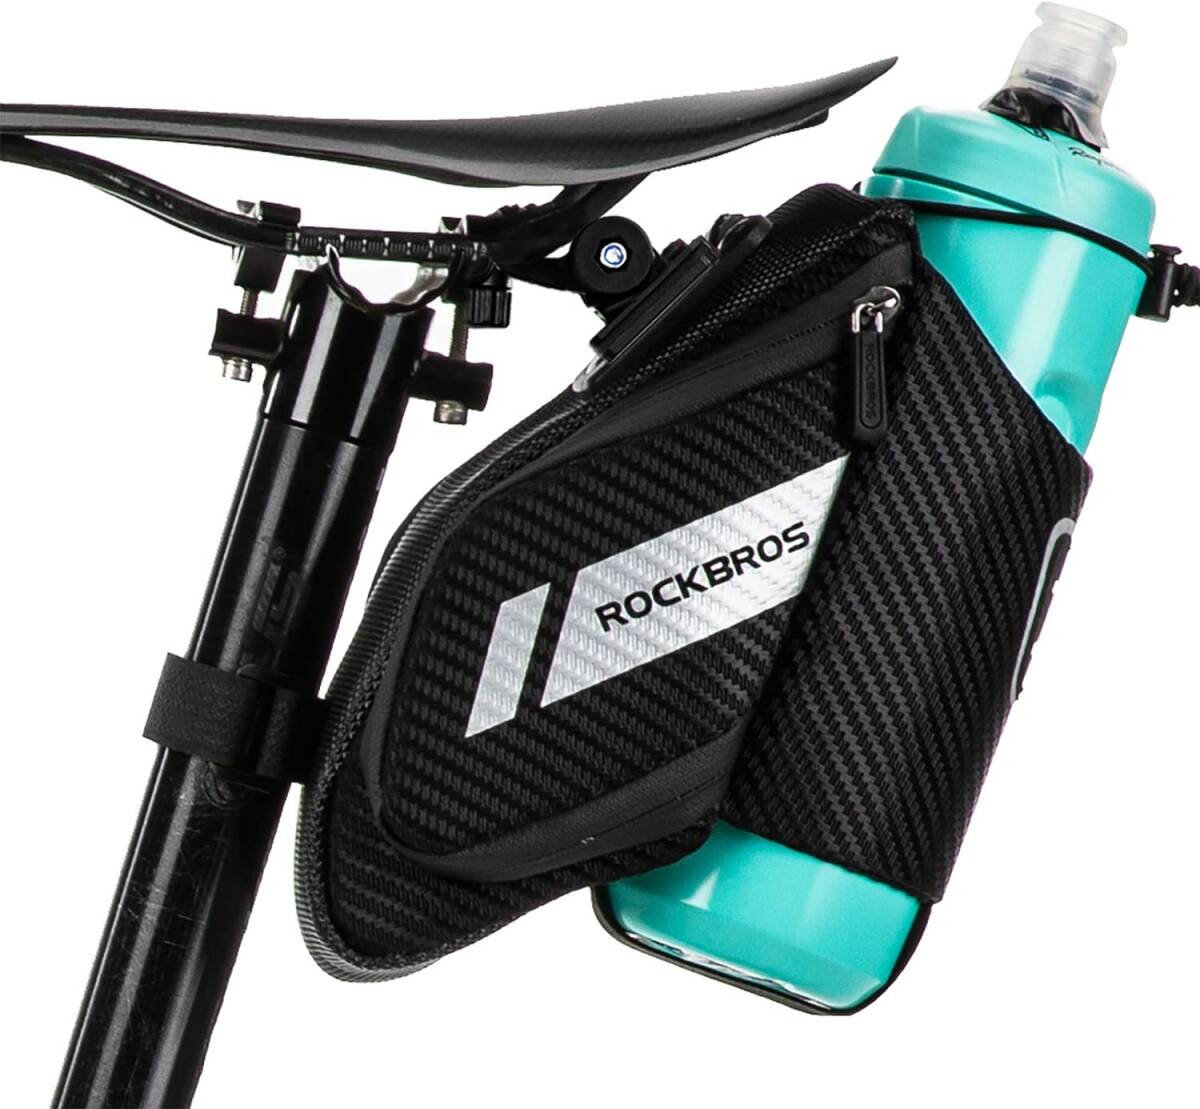 ROCKBROS( lock Bros ) bicycle saddle-bag bottle holder road bike bag waterproof high capacity small articles storage flask inserting attaching 